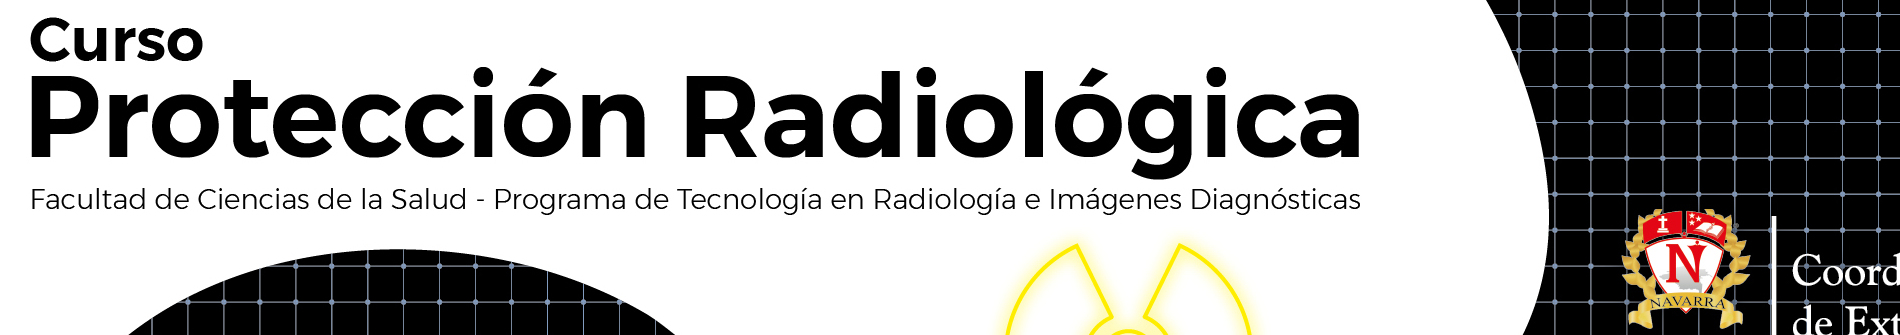 Banner proteccion radiologica 2